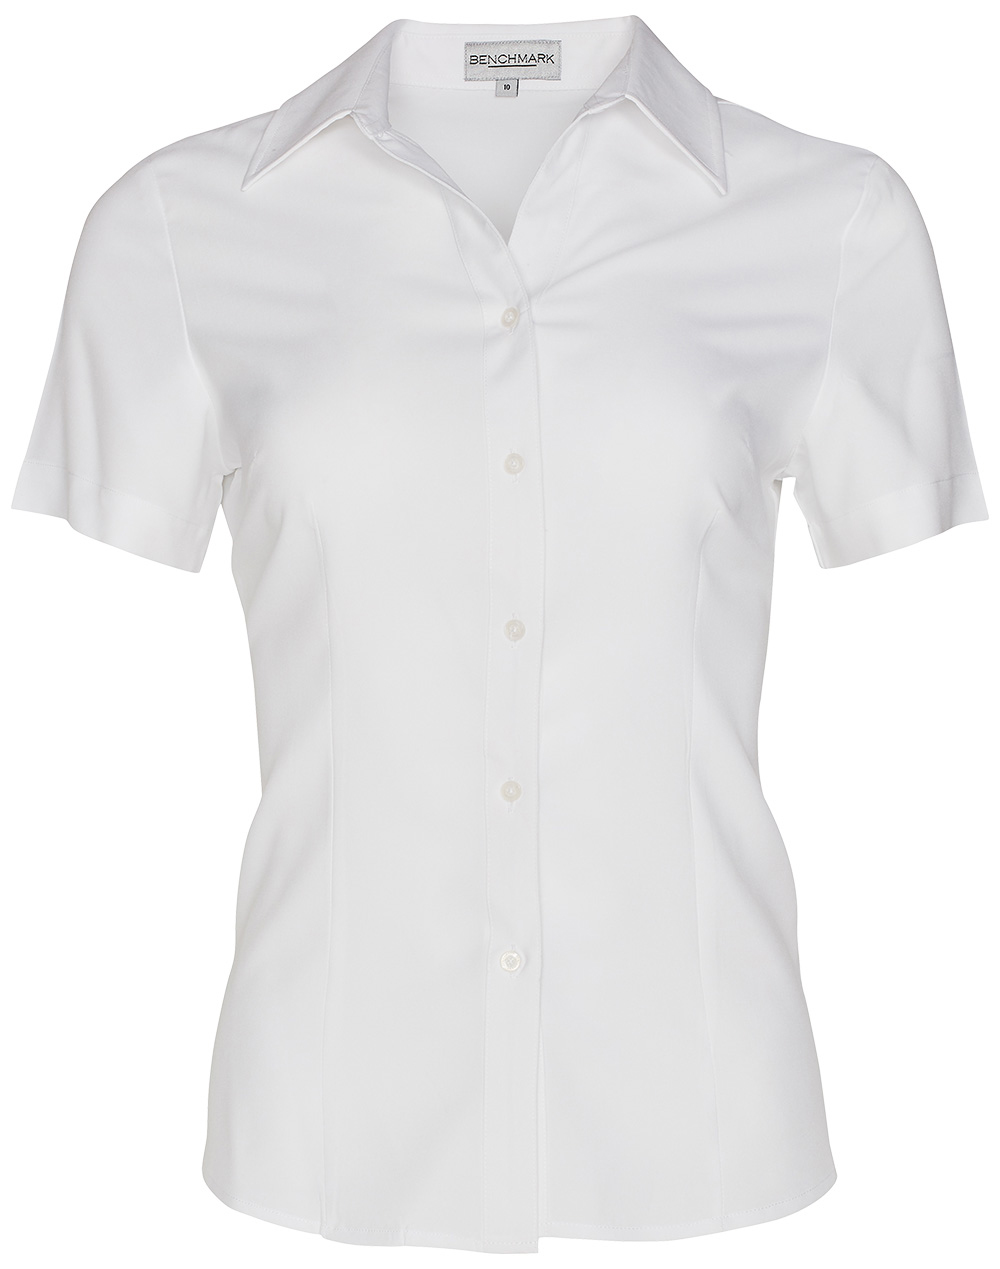 M8600S Women’s CoolDry Short Sleeve Shirt